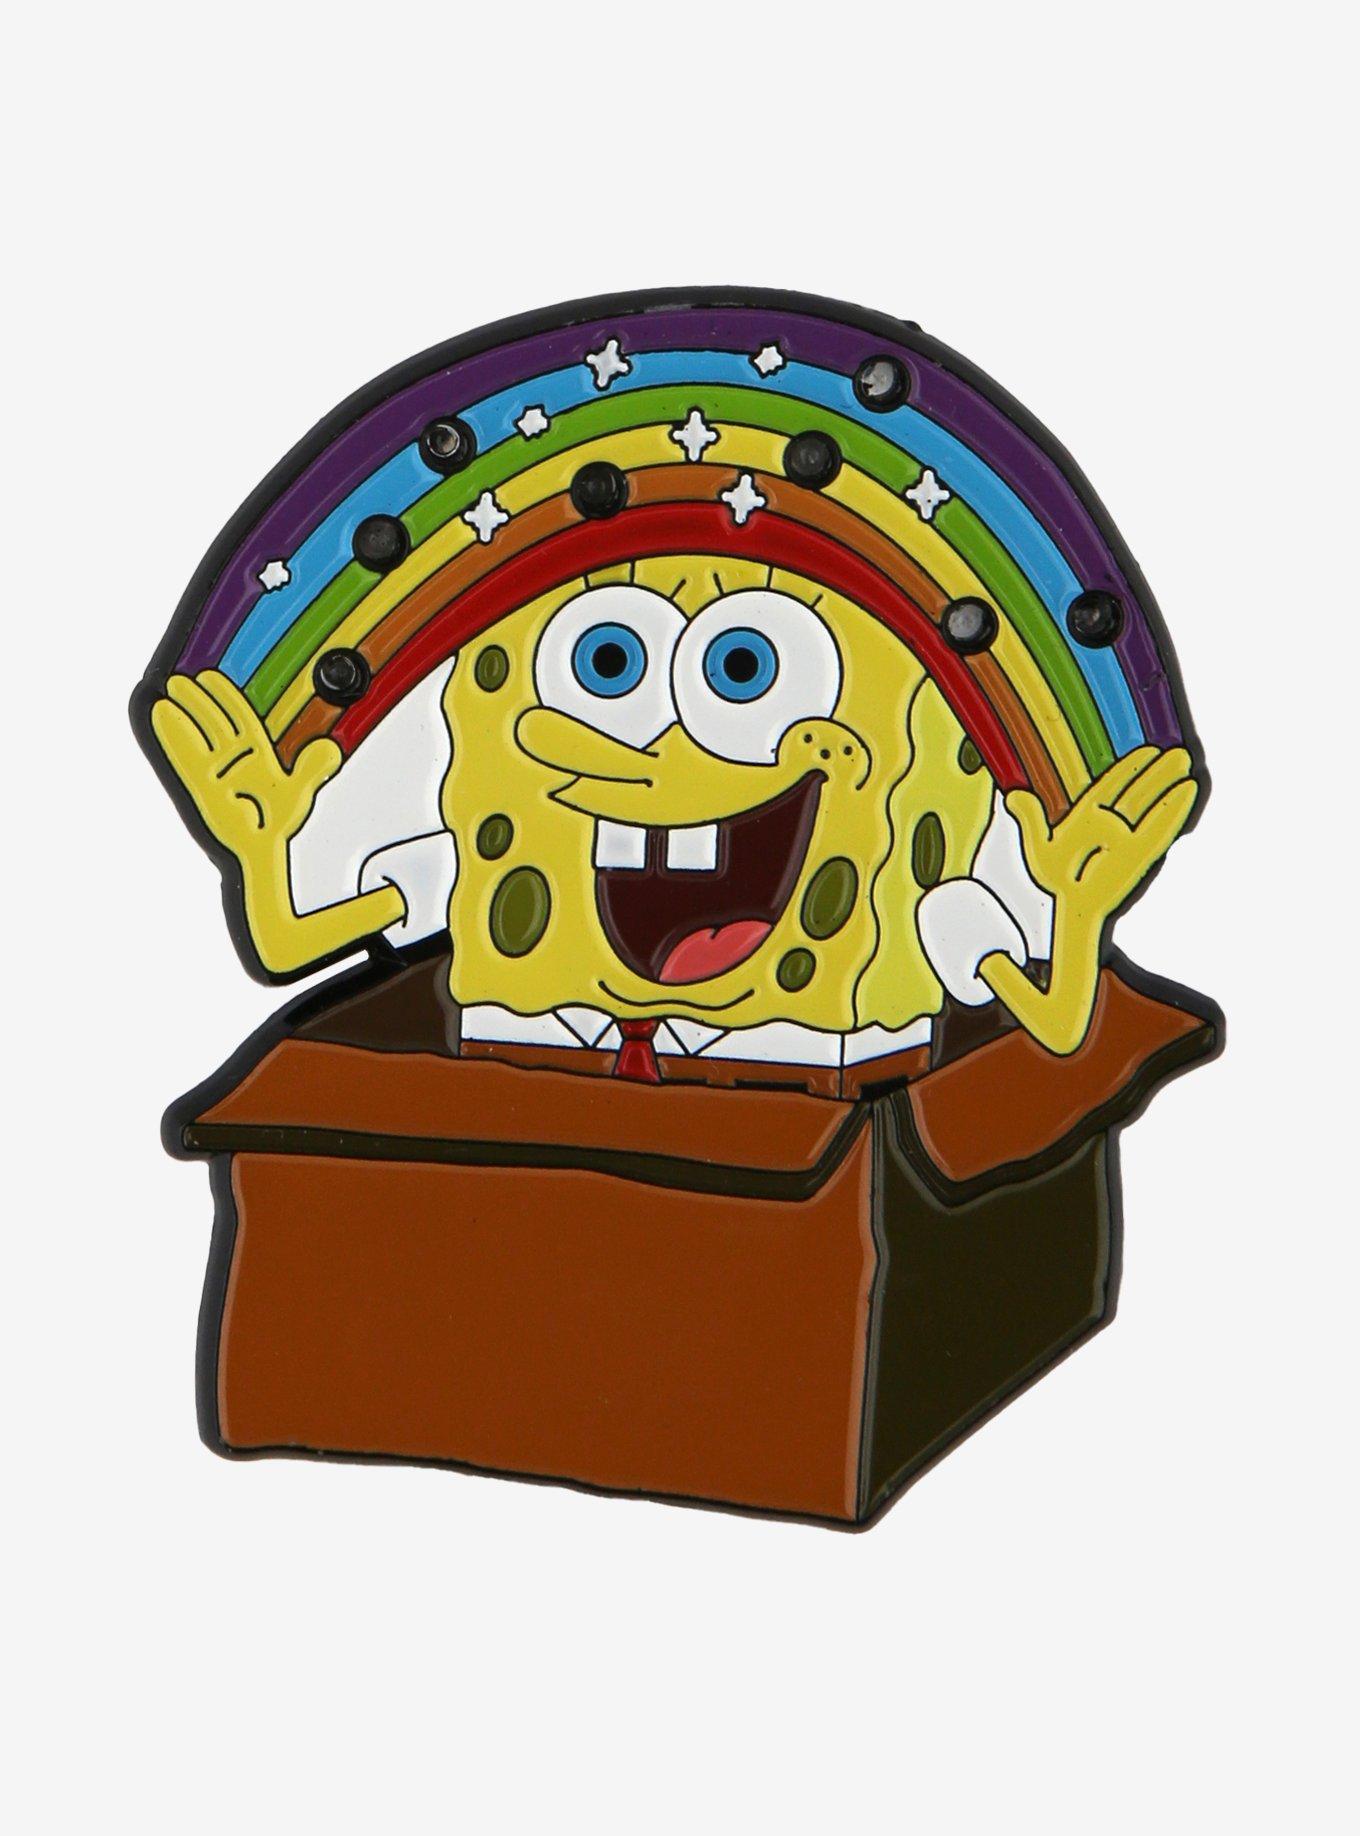 Spongebob Imagination Box